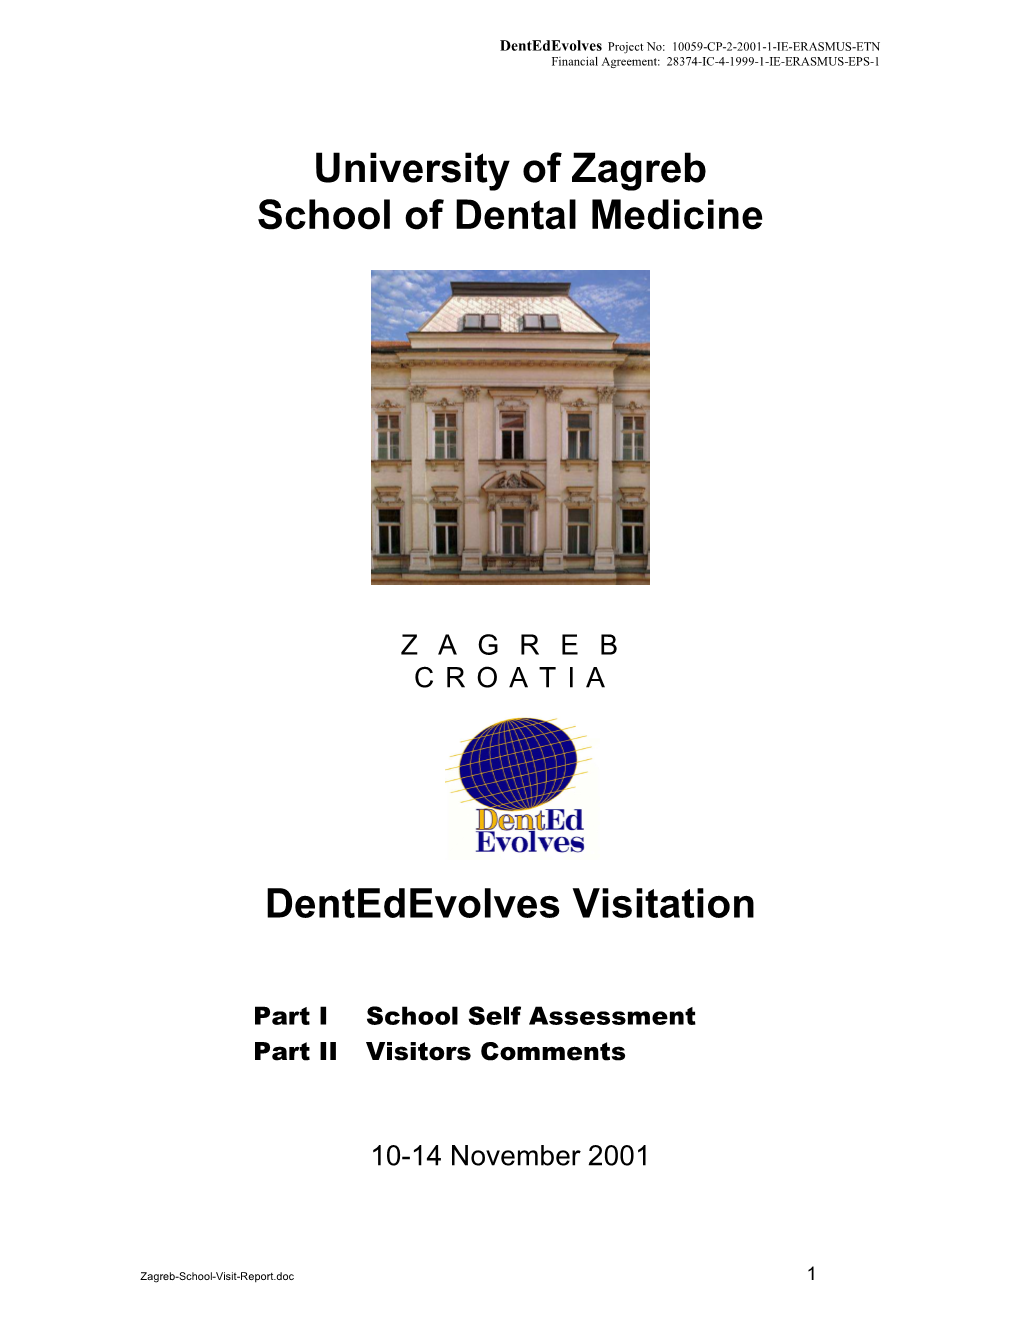 University of Zagreb School of Dental Medicine Dentedevolves Visitation